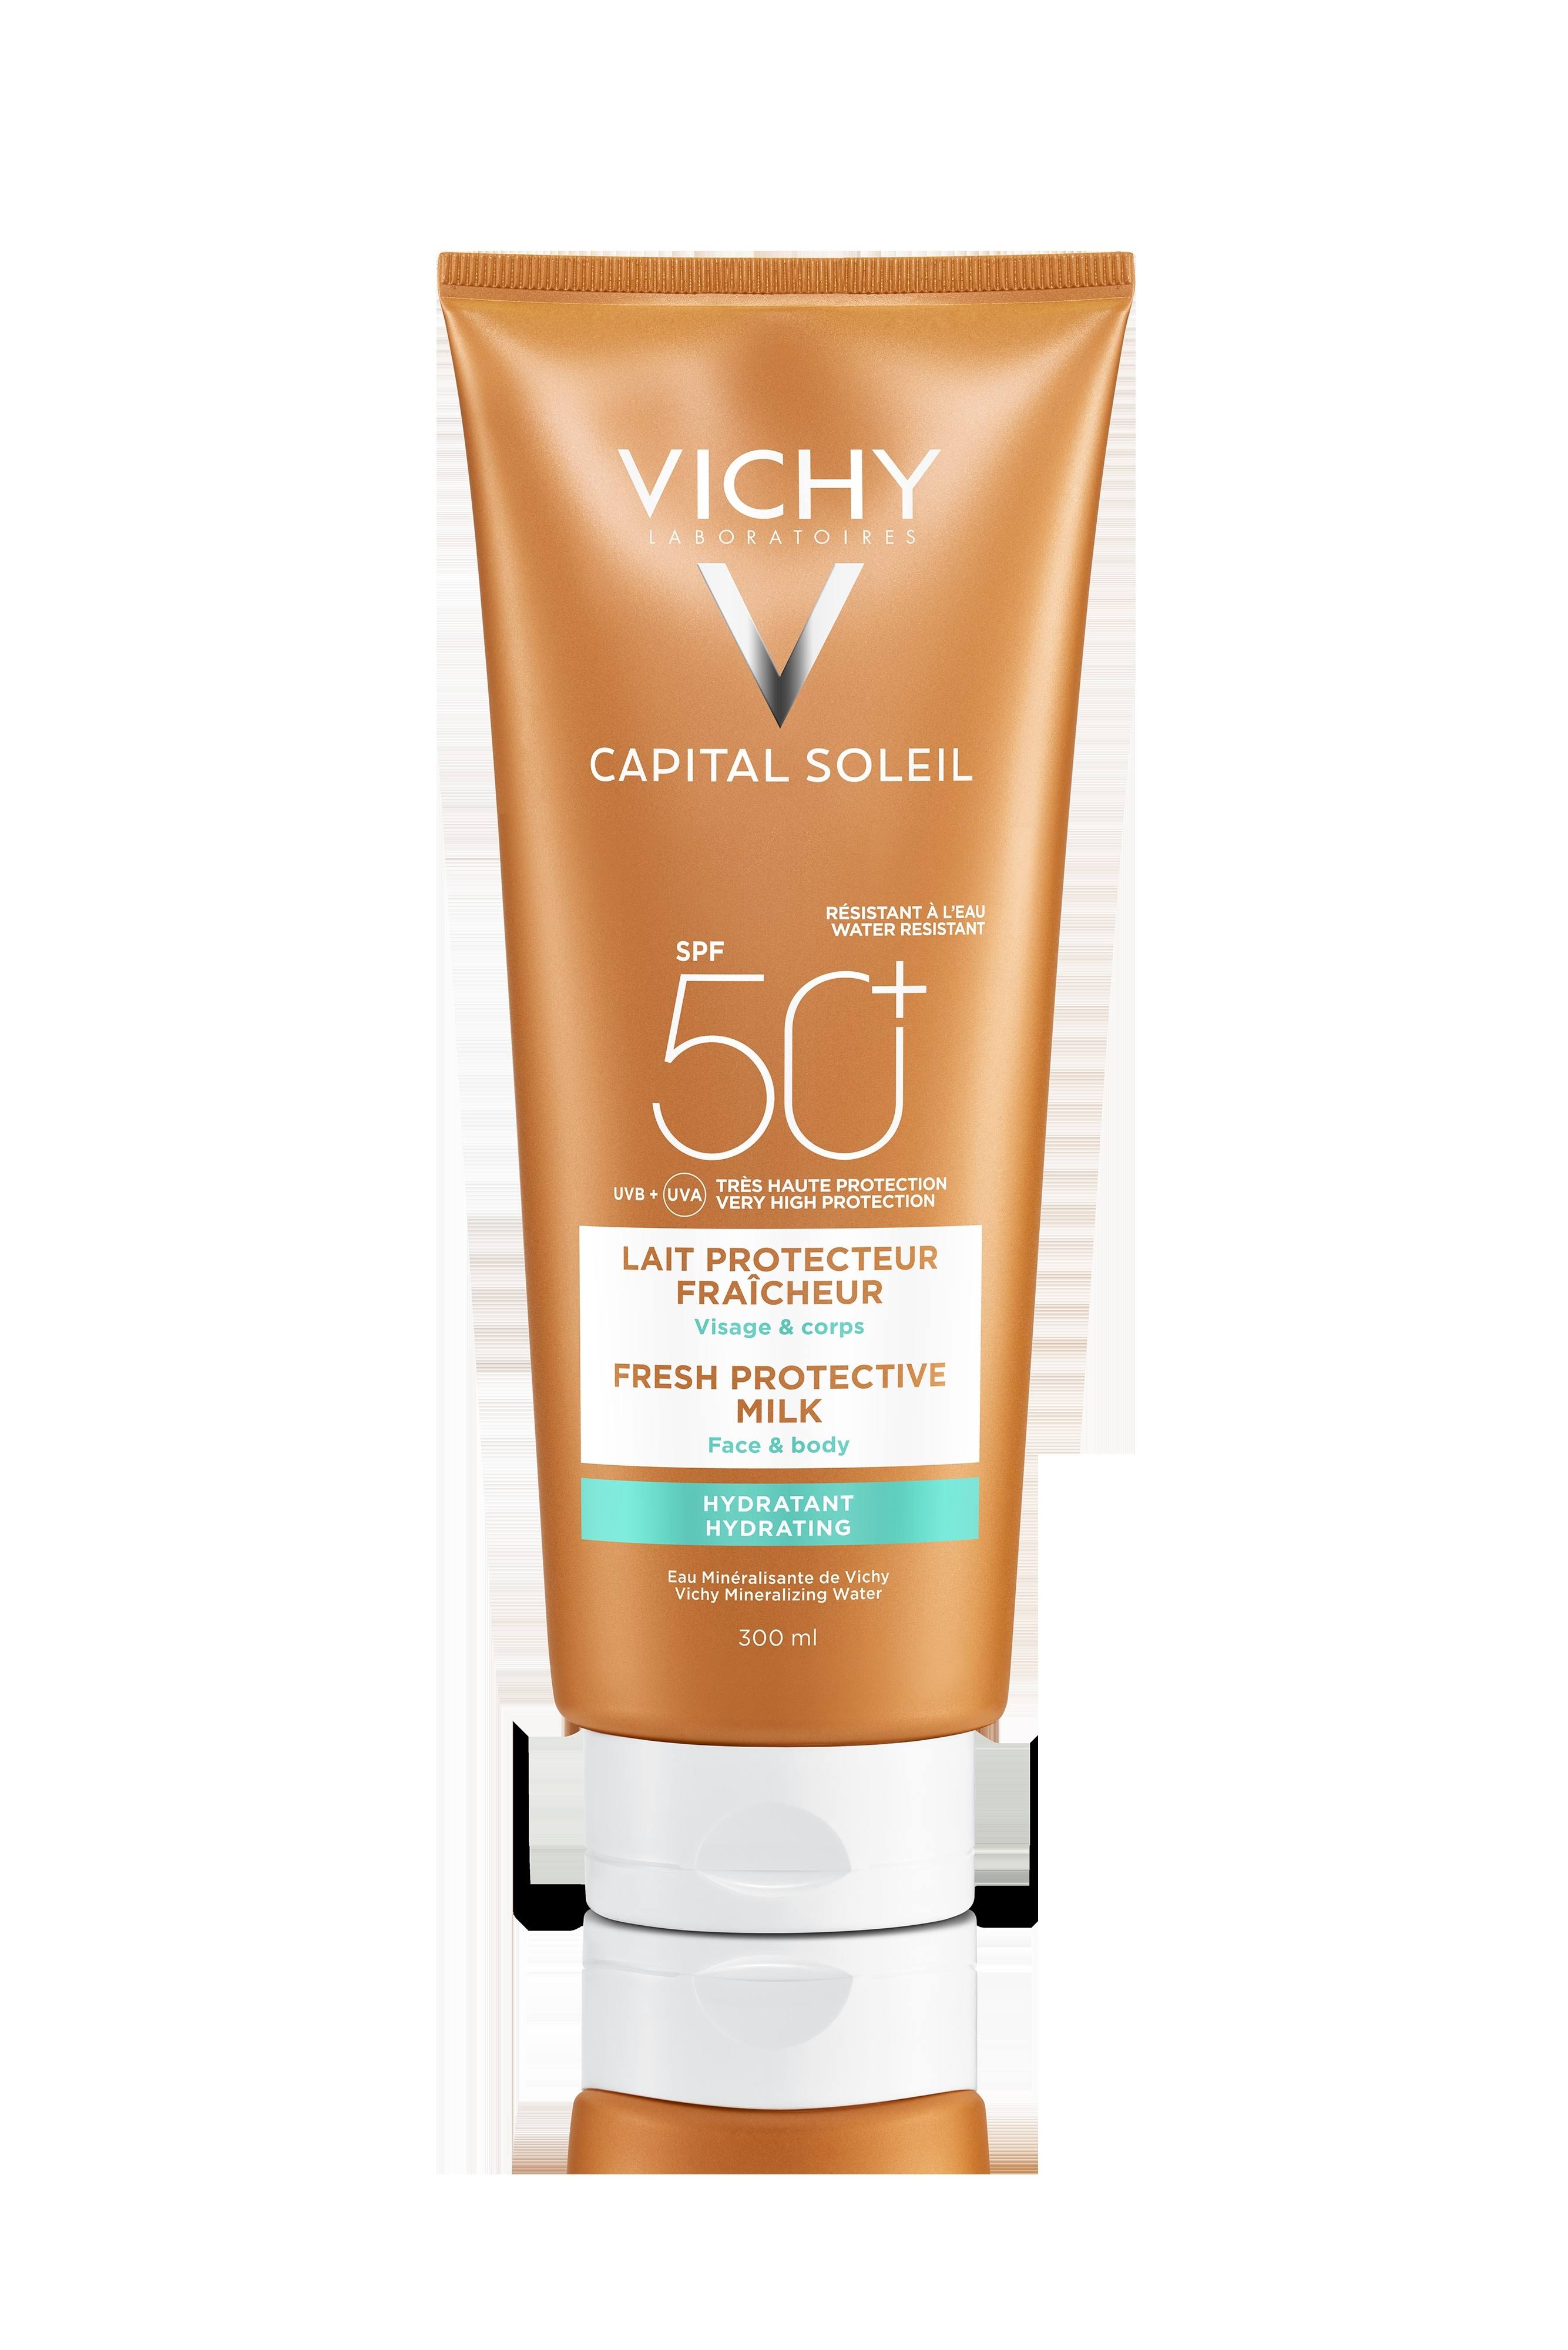 Vichy Capital Soleil Beach Protect Fresh Hydrating SPF 50 Face and Body Milk - 300ml